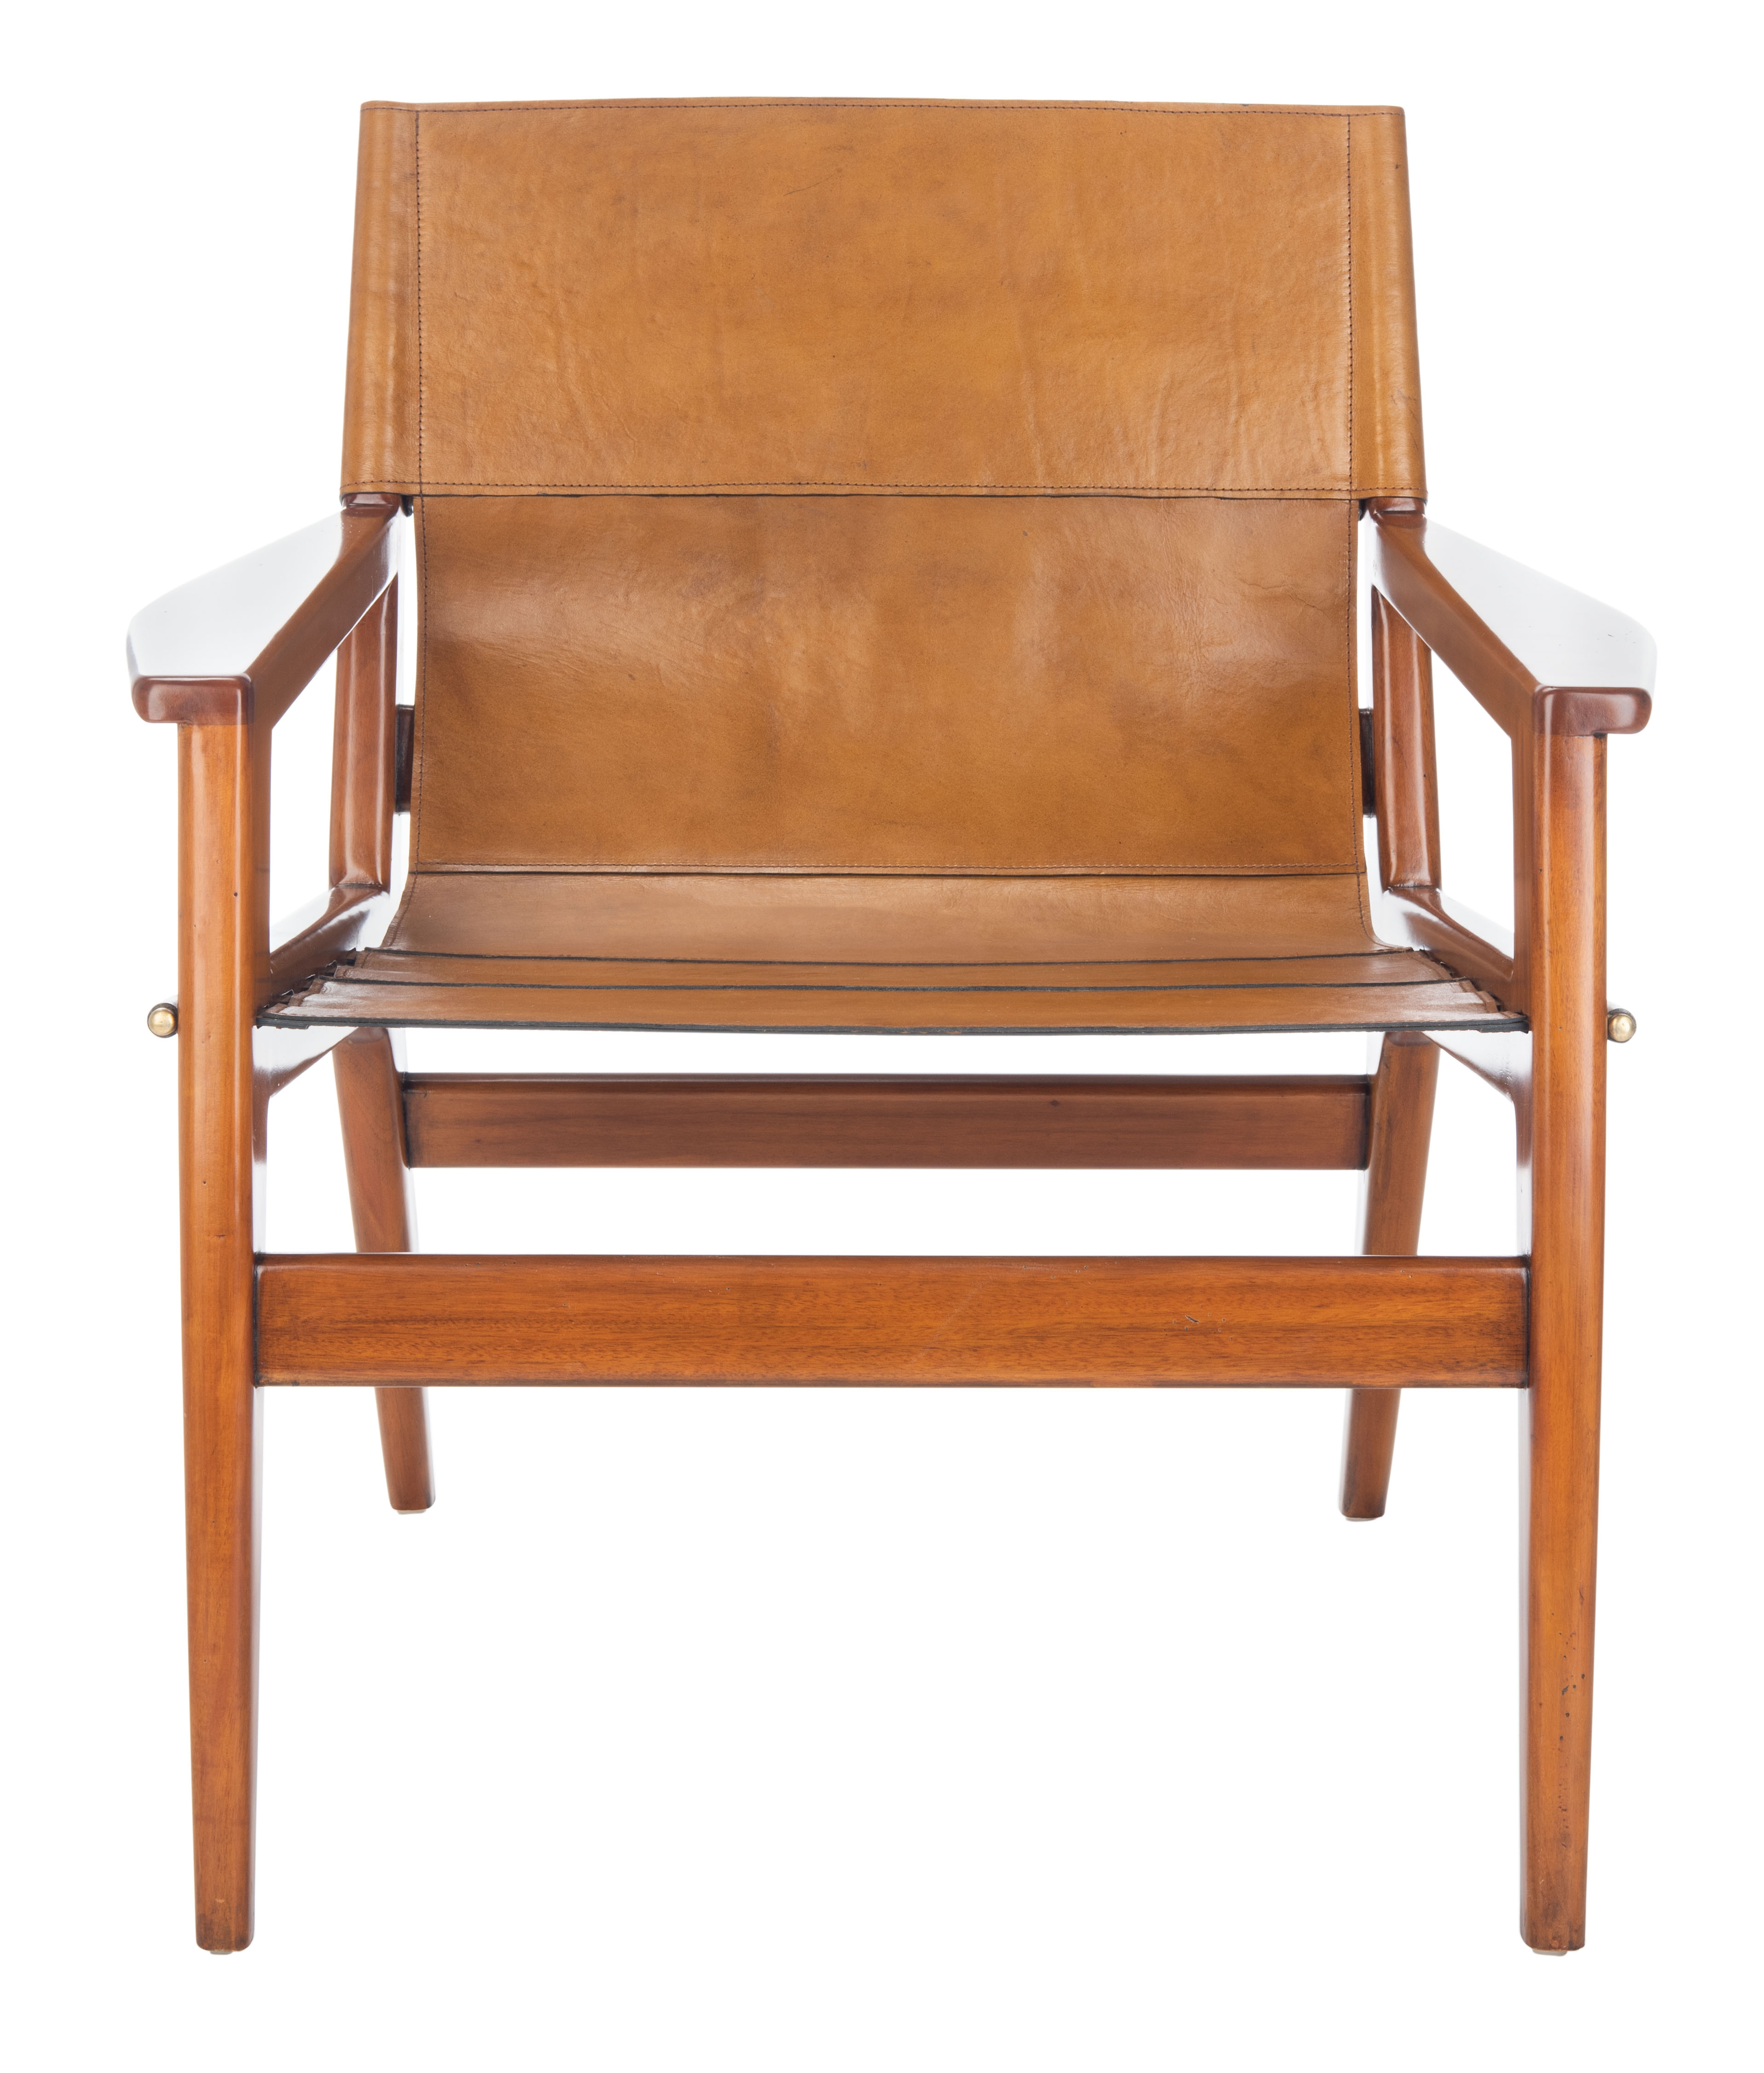 Culkin Leather Sling Chair - Brown - Arlo Home - Arlo Home